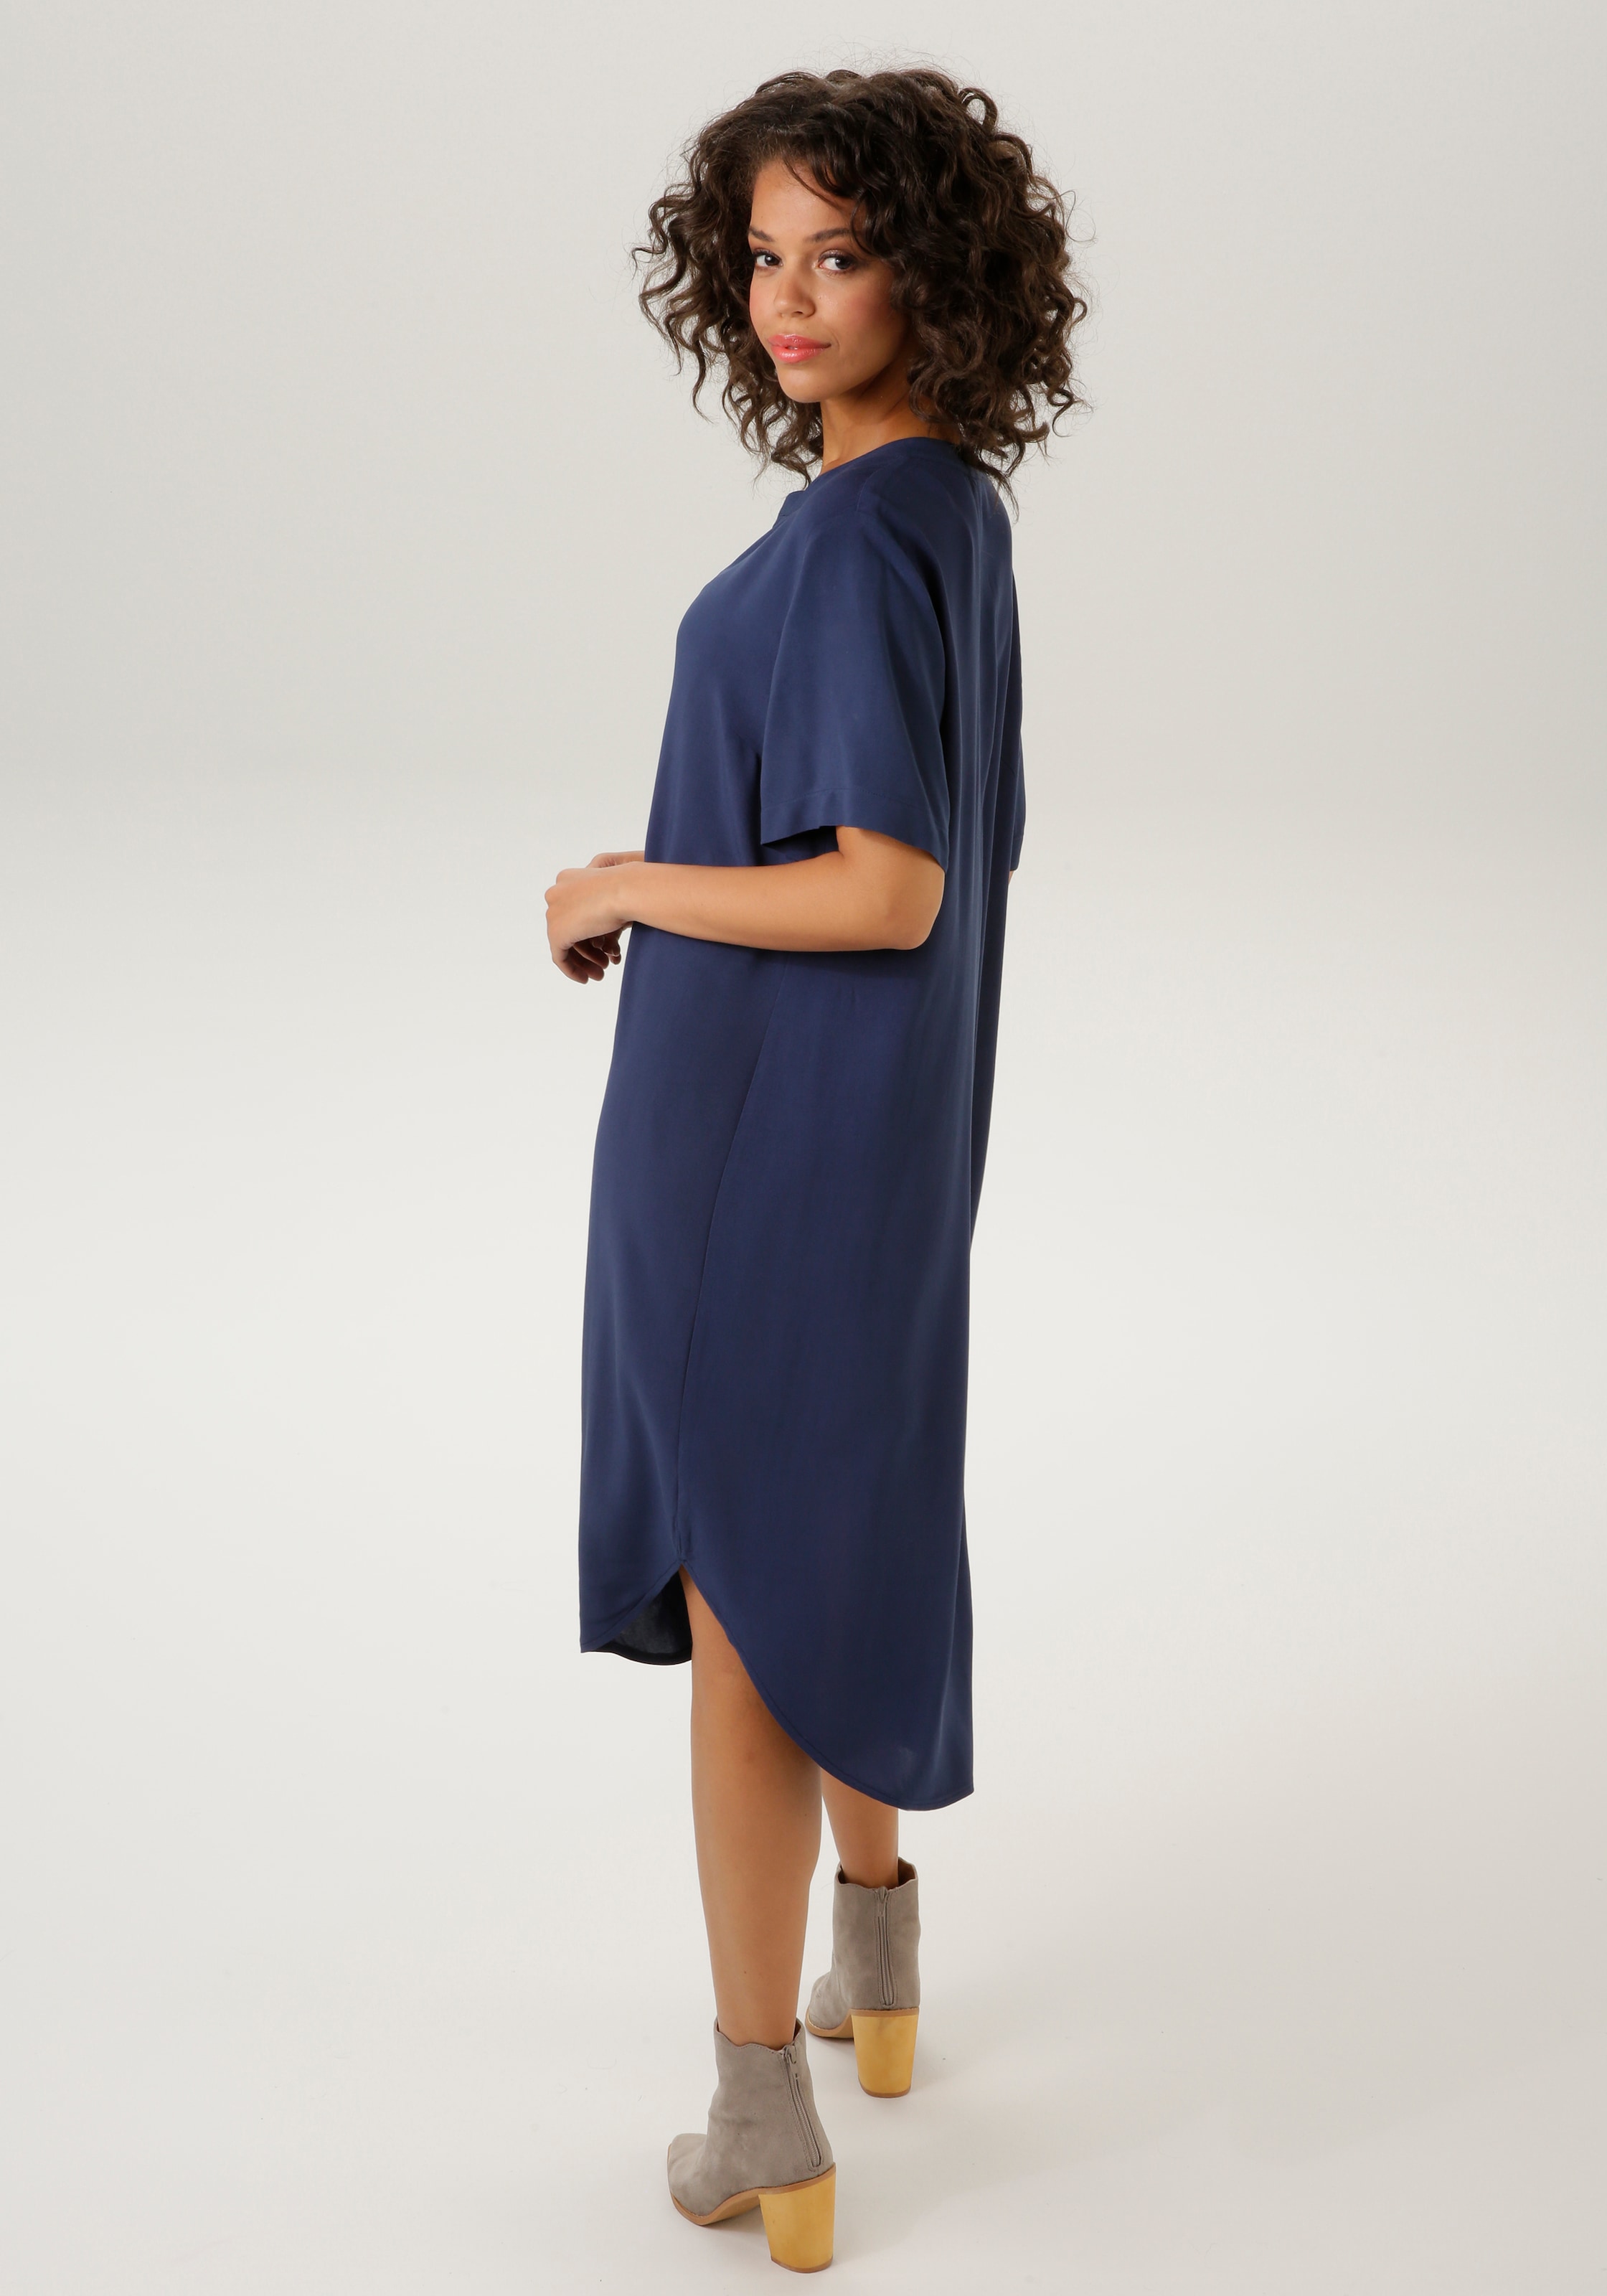 bestellen Aniston KOLLEKTION | Blusenkleid, - CASUAL NEUE in Farben online UNIVERSAL trendigen